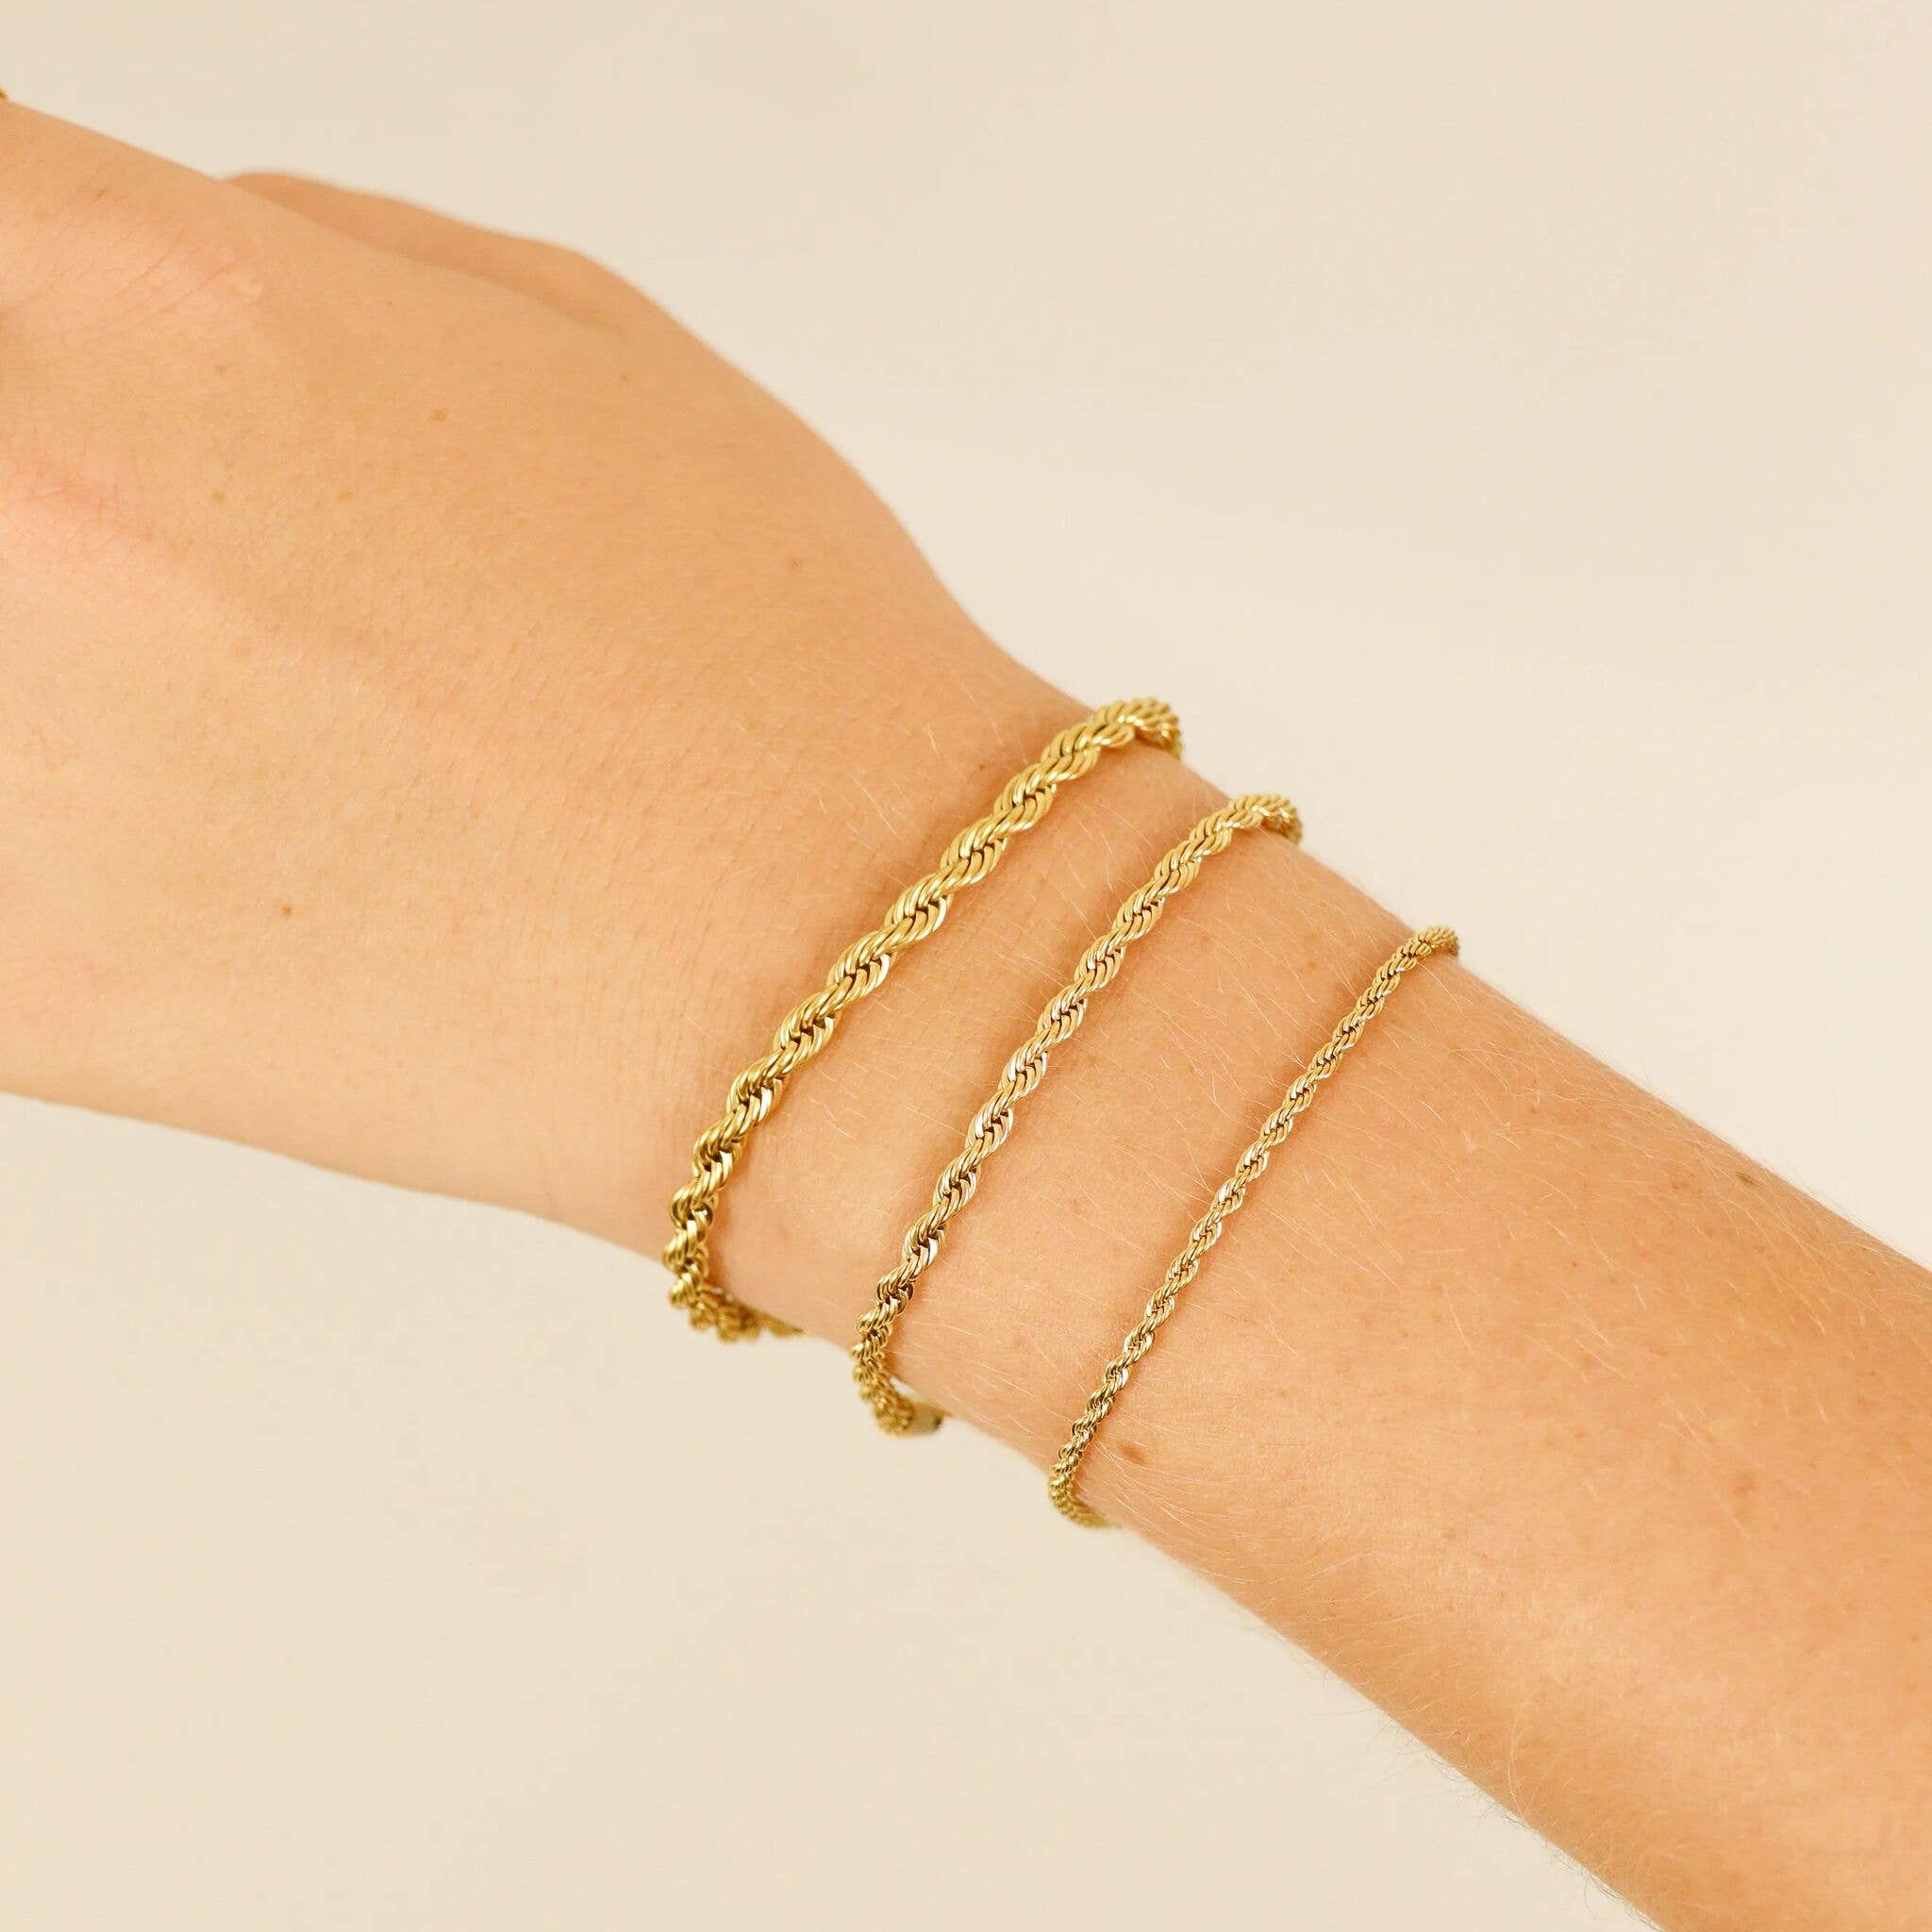 18k Gold Rope Chain Waterproof Bracelet / Anklet